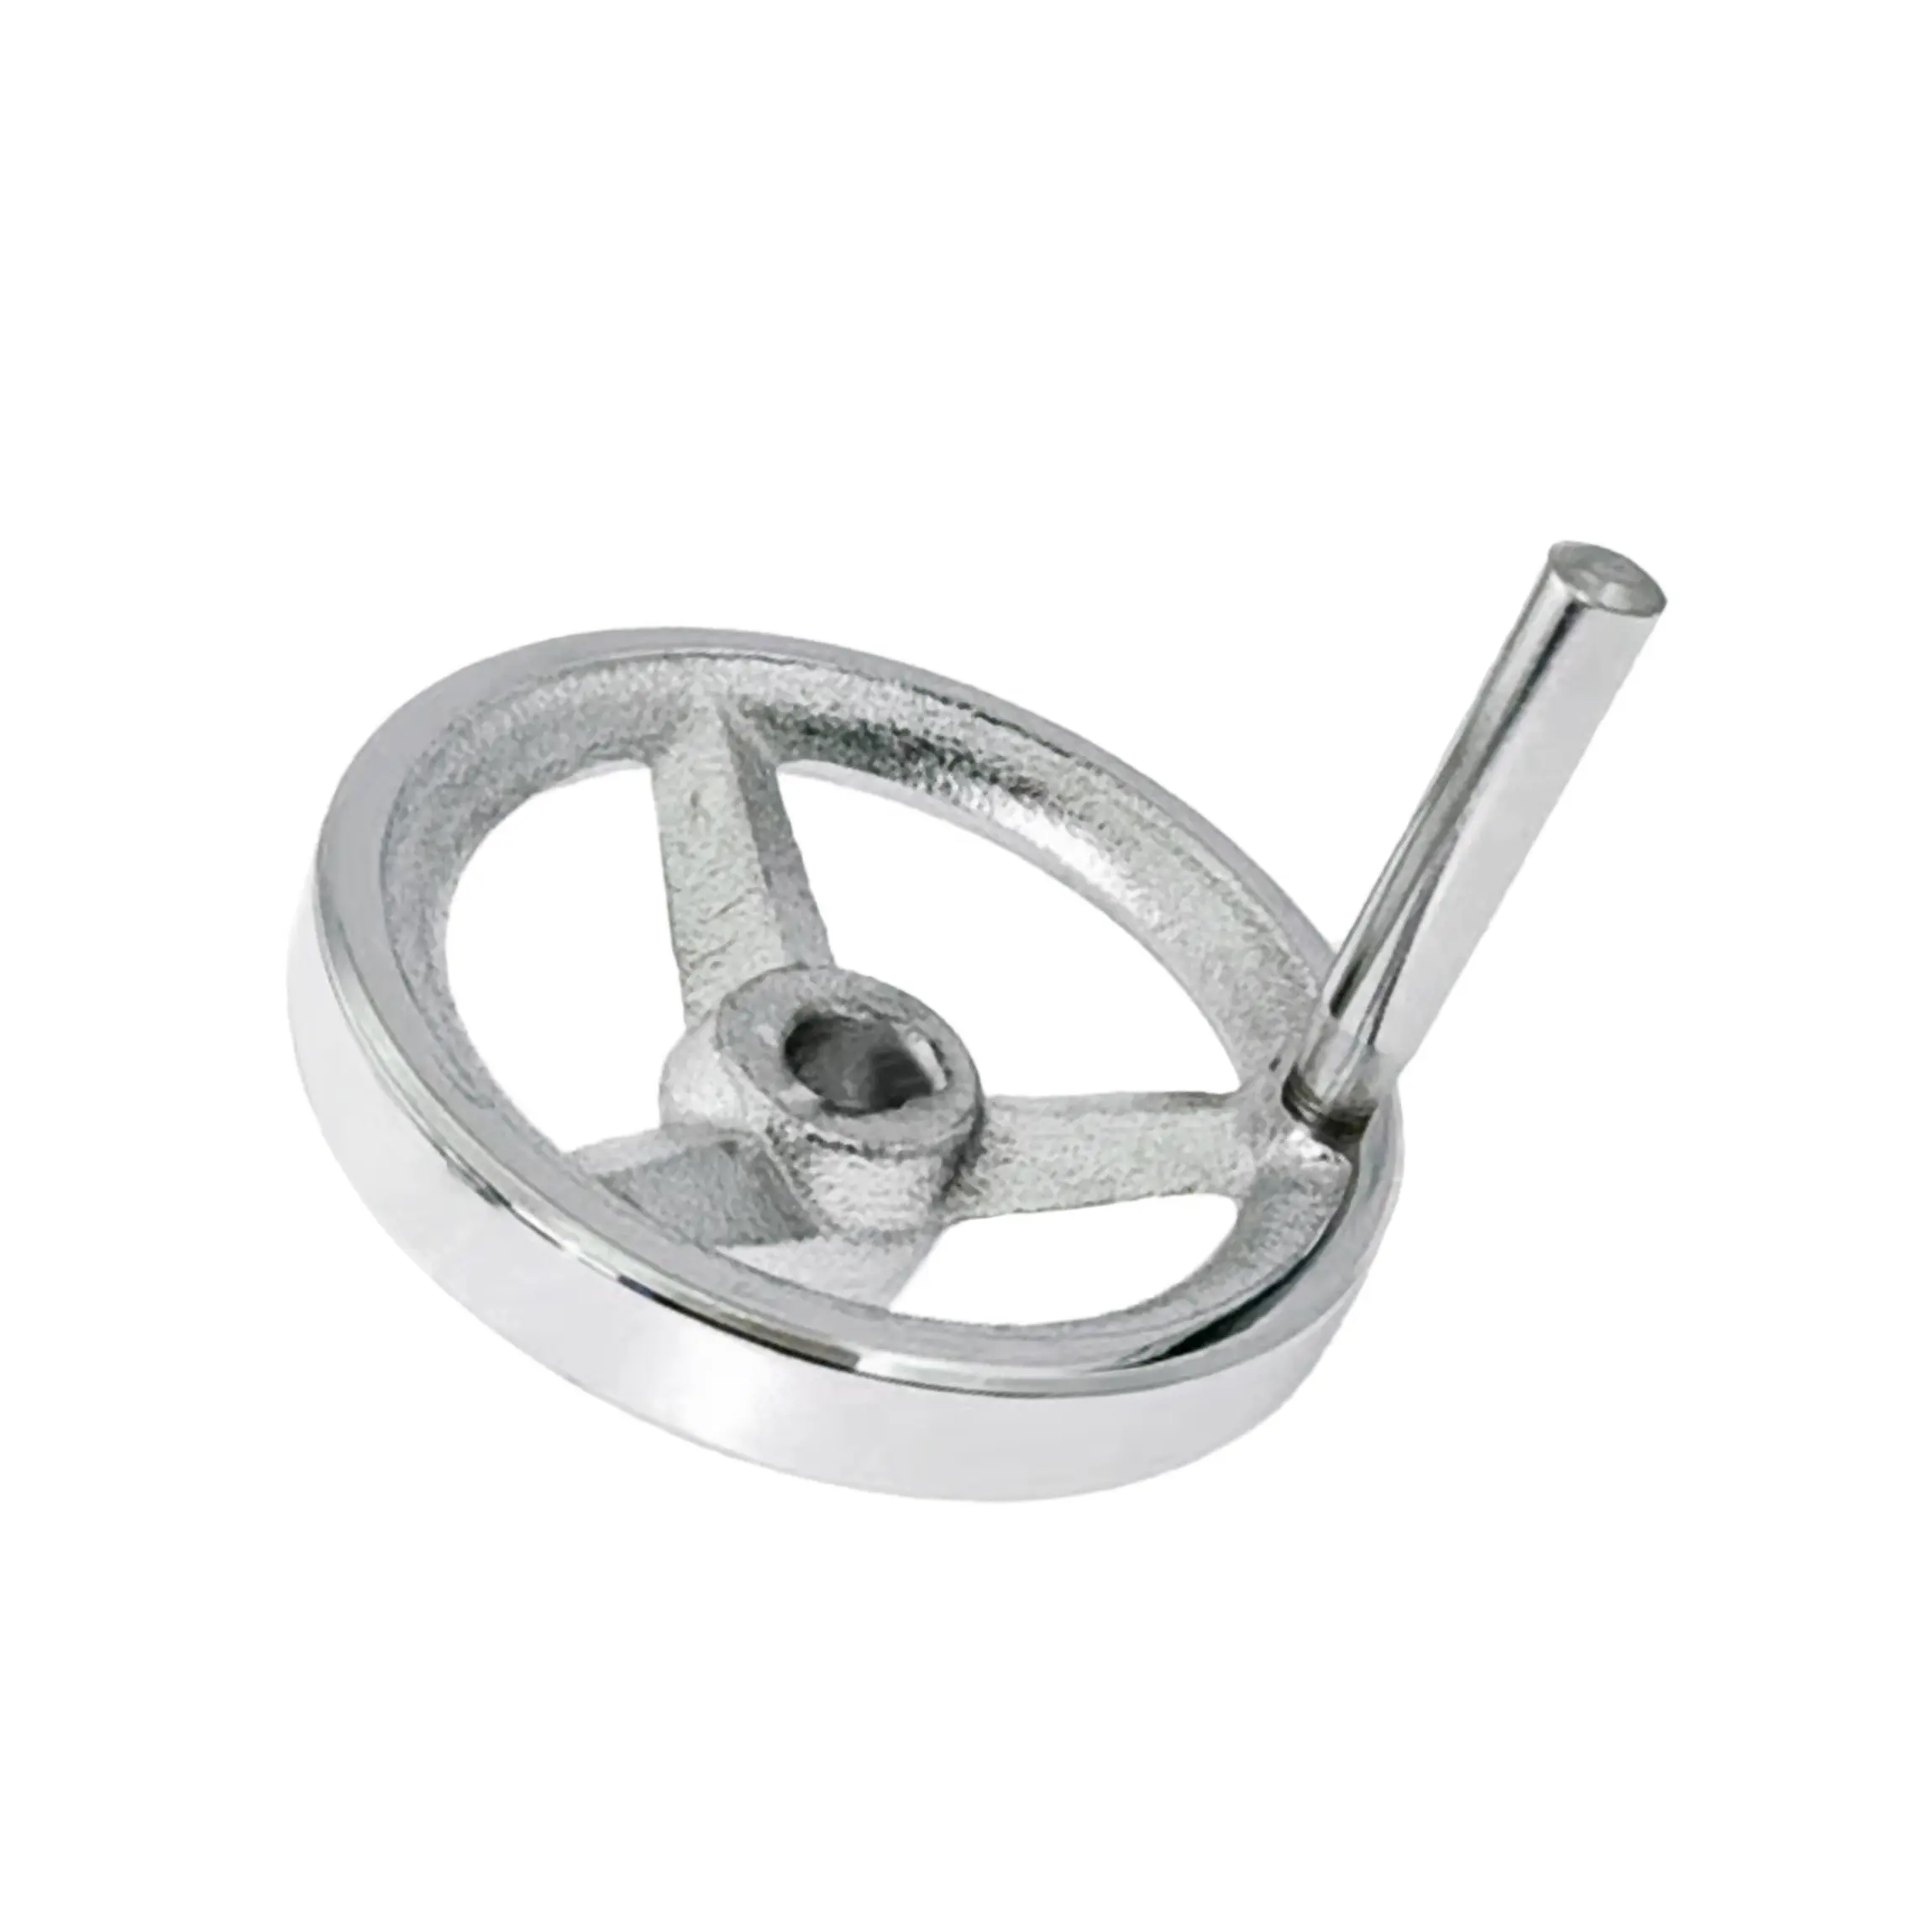 Factory direct chrome three-spoke mechanical handwheels for industry